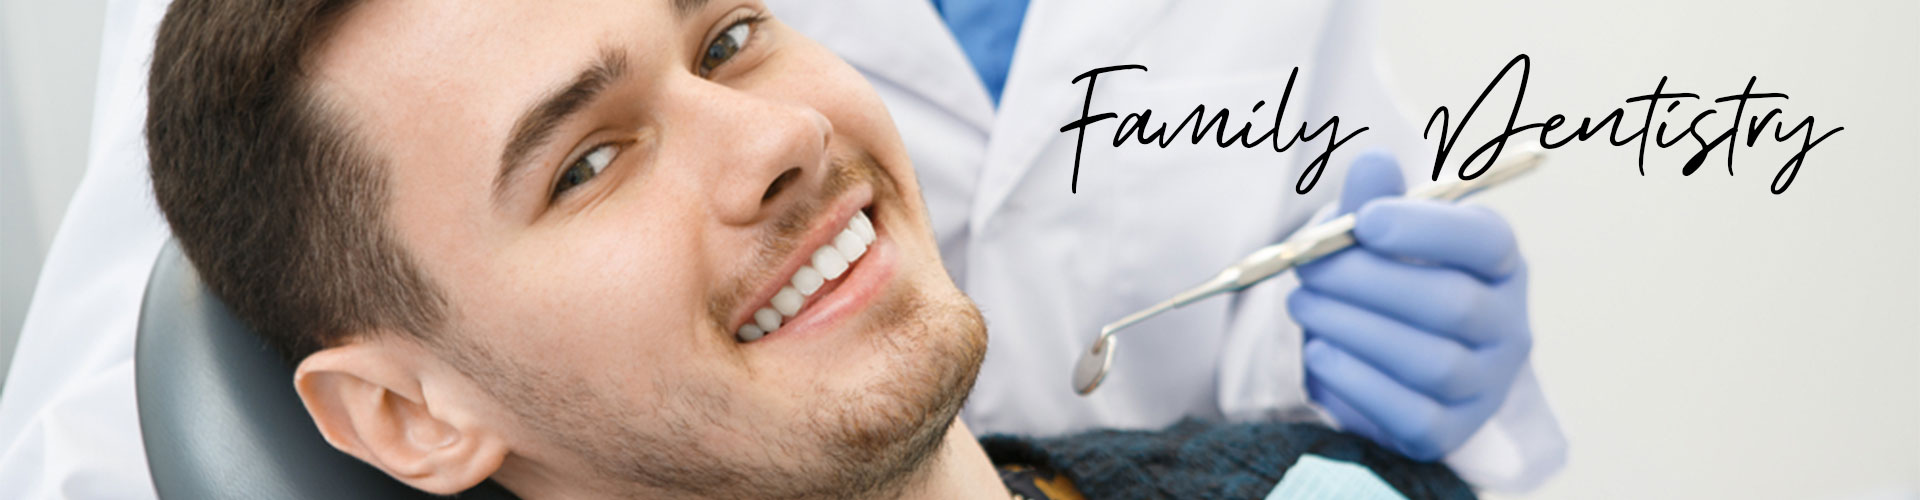 Family-dentistry